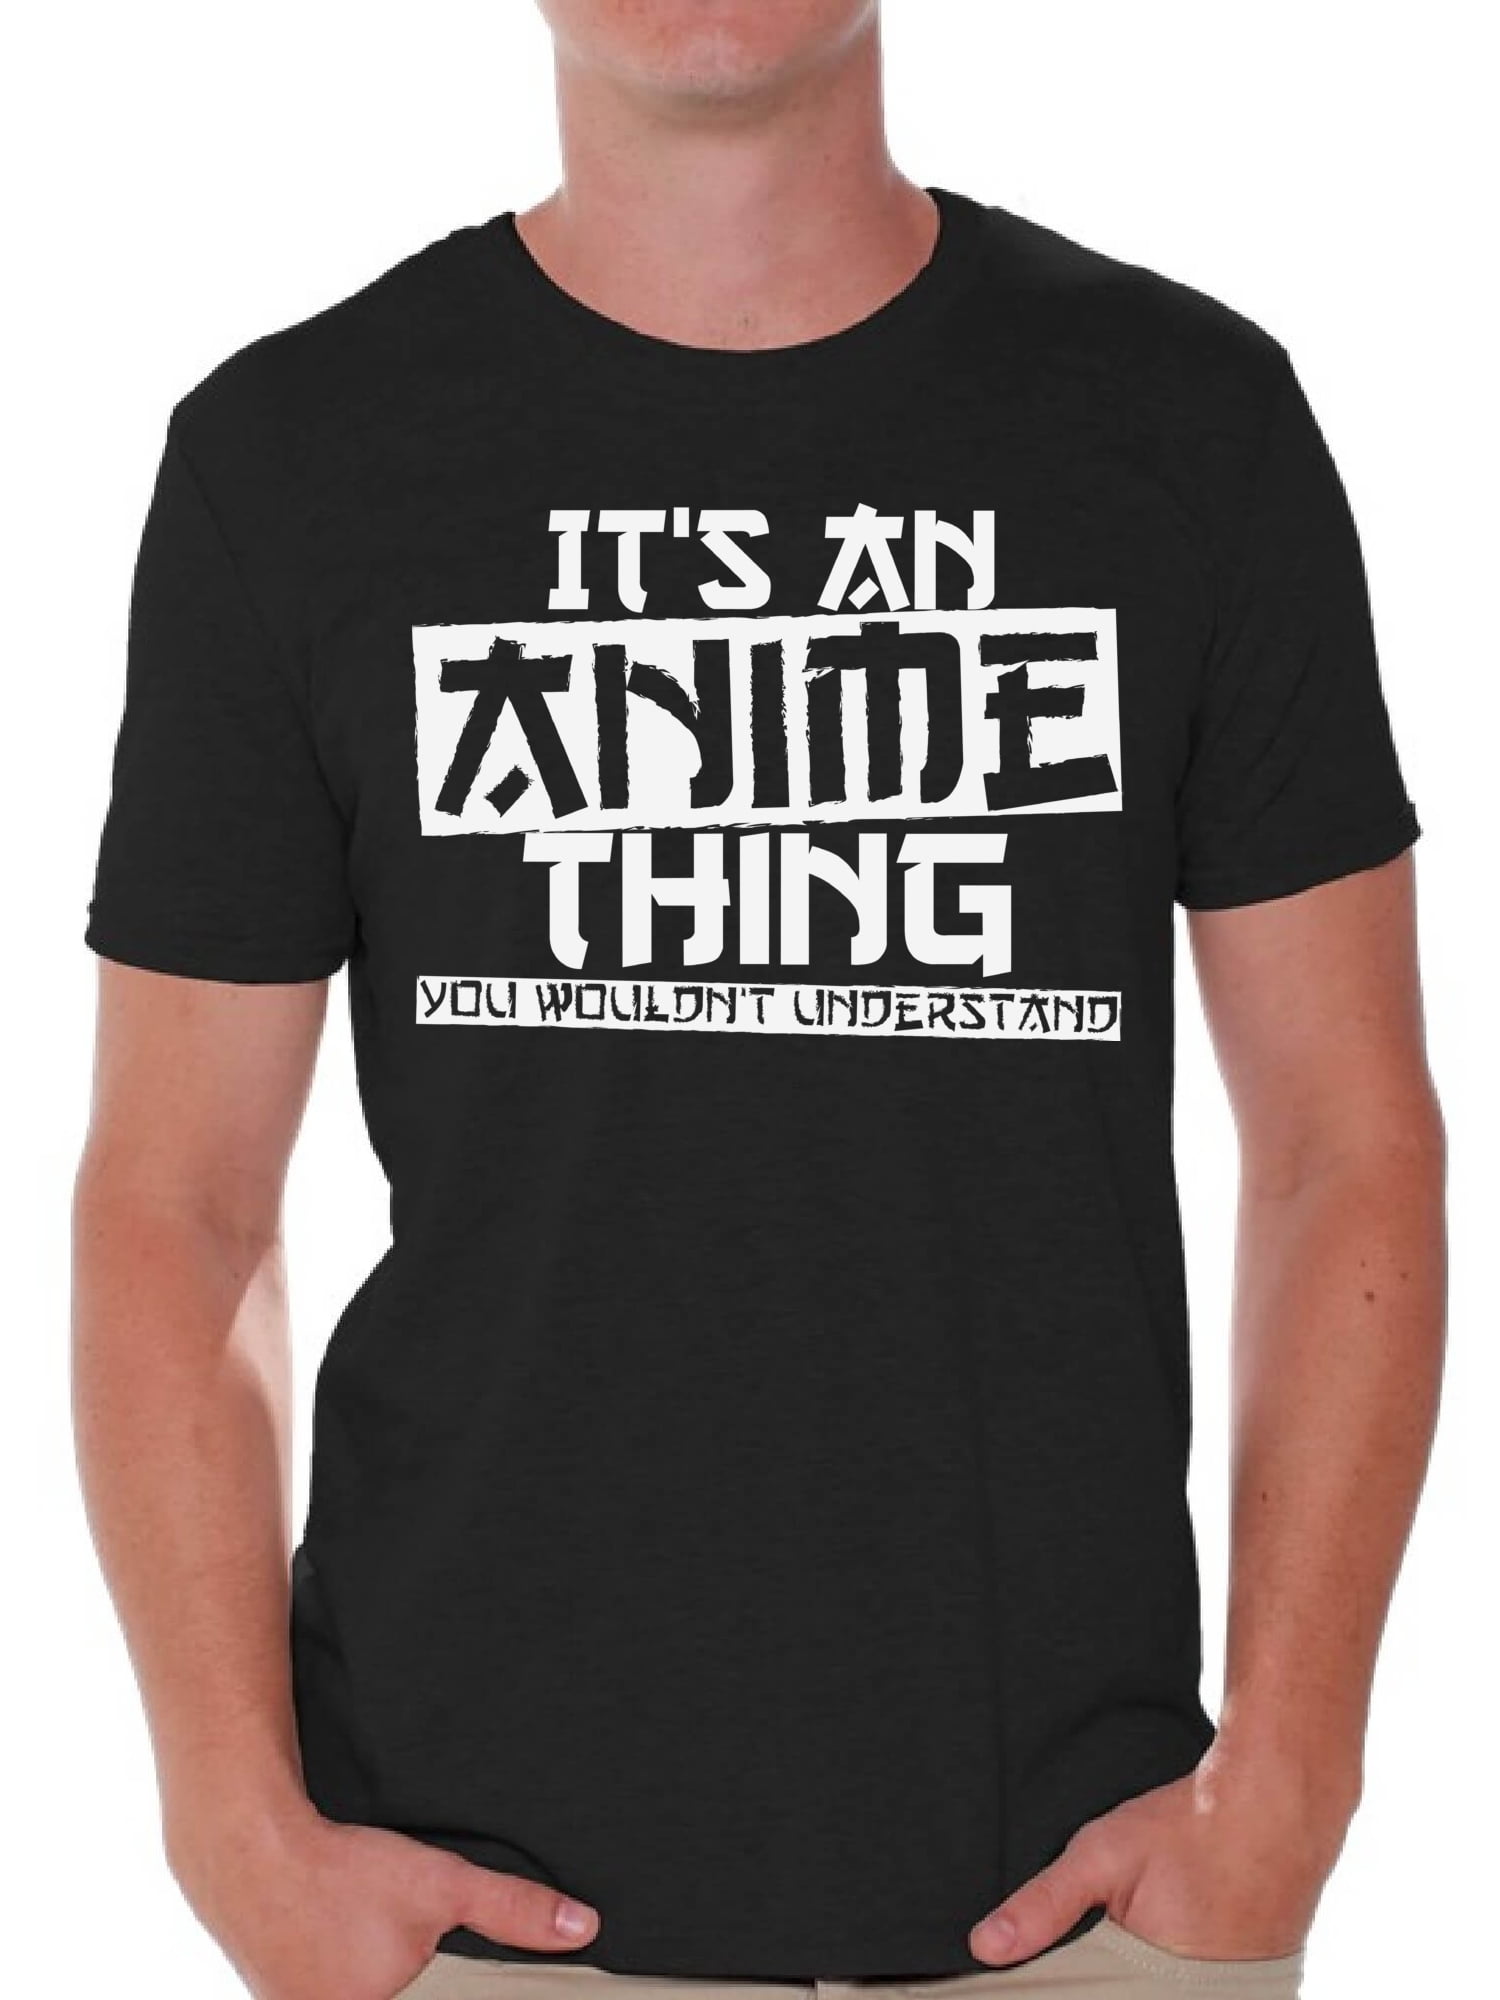 Awkward Styles Men's Humor Shirts Mens Humor Graphic Tees Anime Thing ...